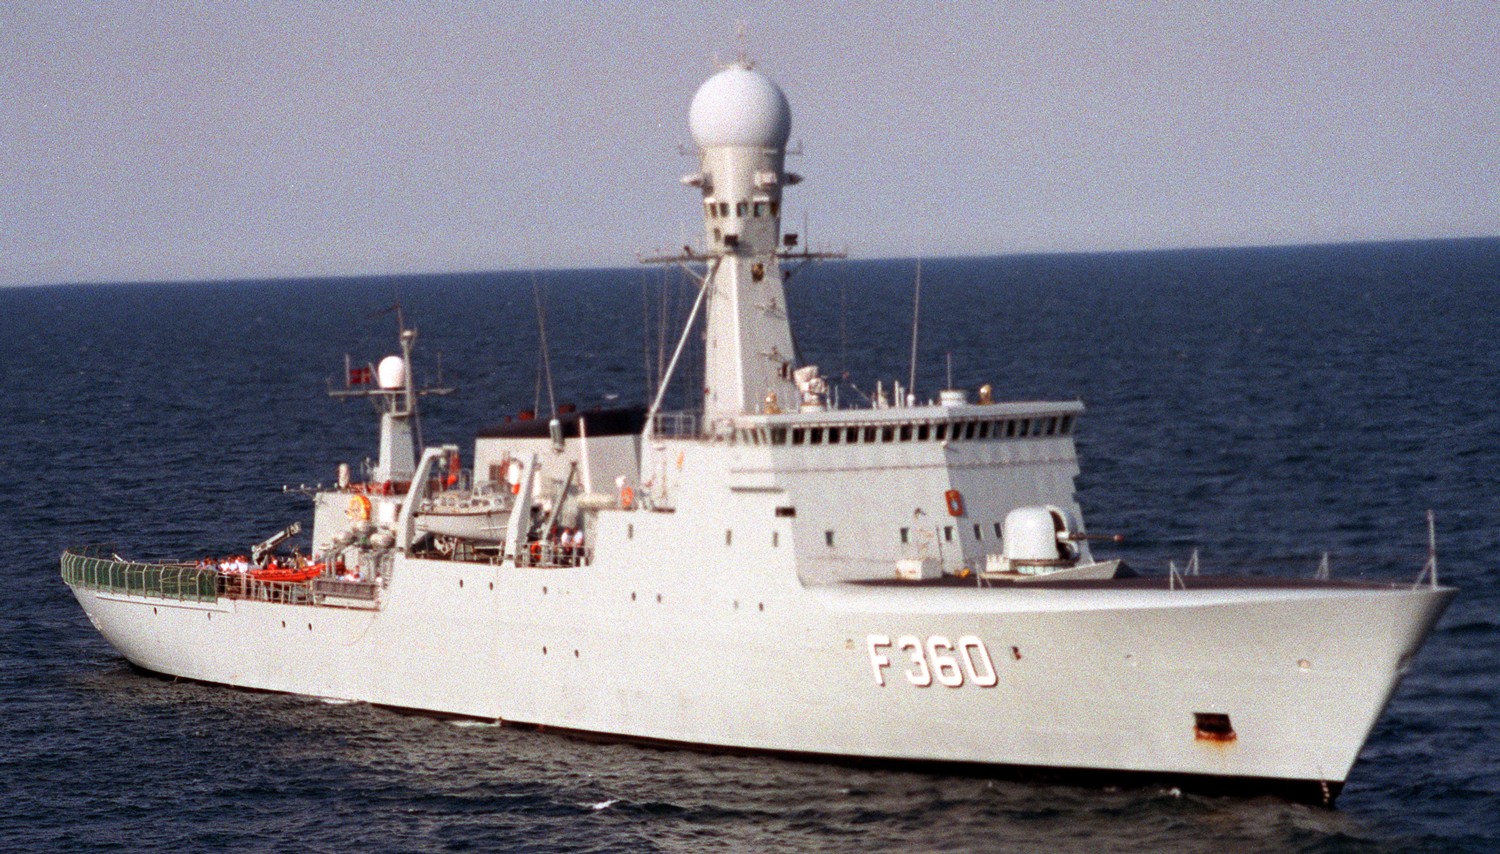 f-360 hdms hvidbjornen thetis class ocean patrol frigate royal danish navy kongelige danske marine kdm inspektionsskibet 41